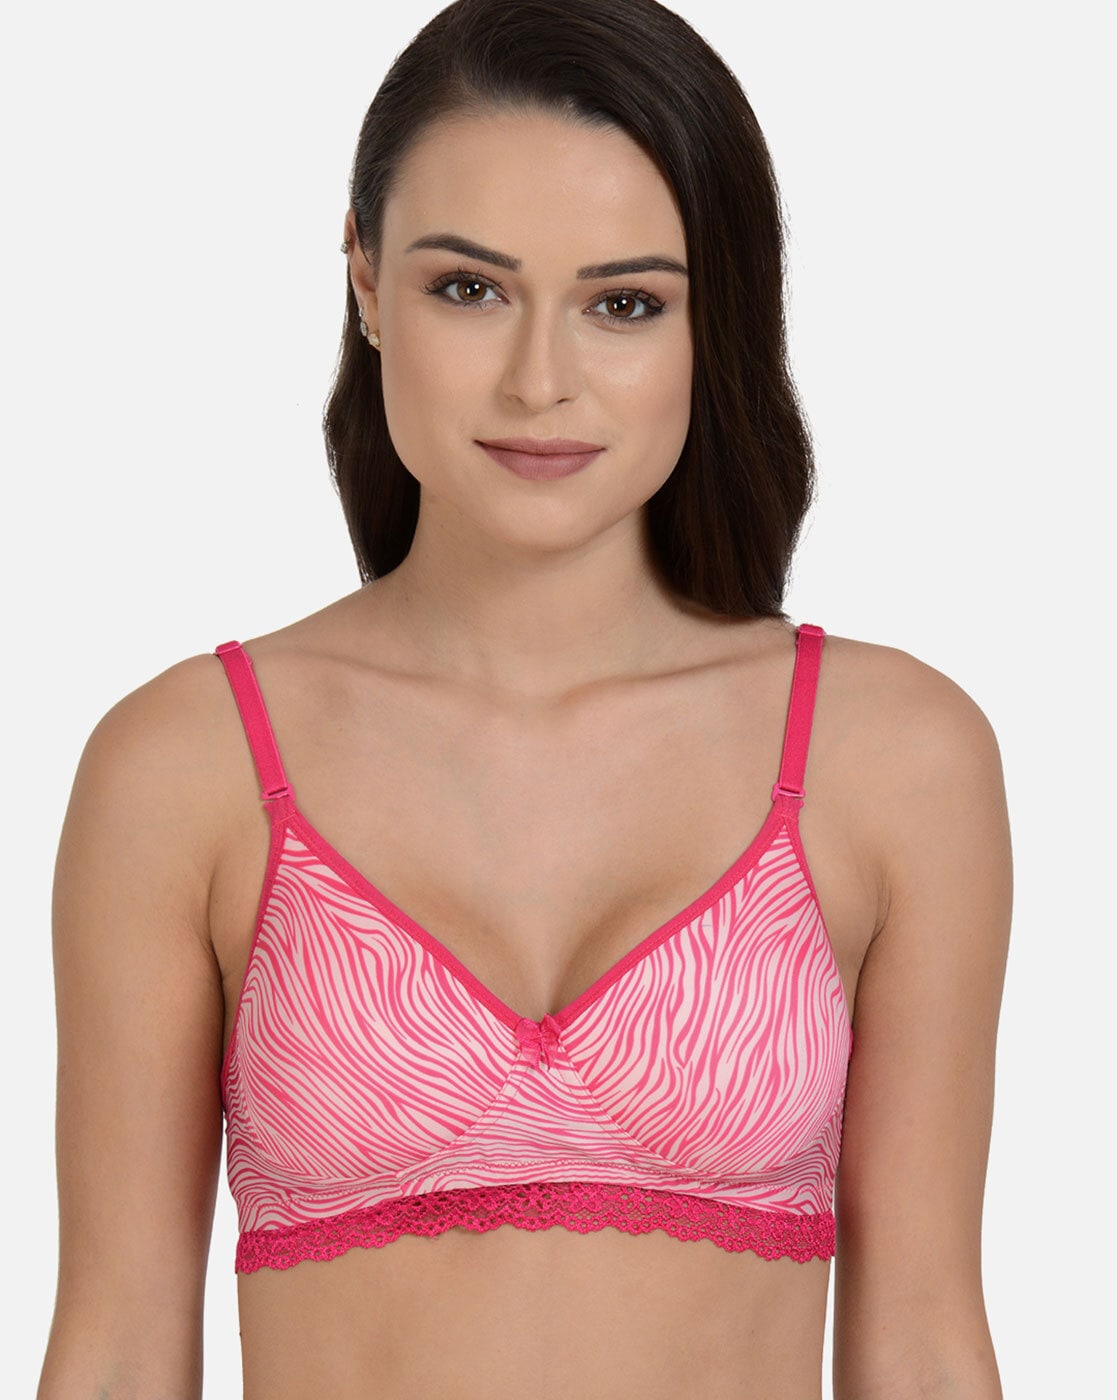 Buy Pink Bras for Women by MOD & SHY Online